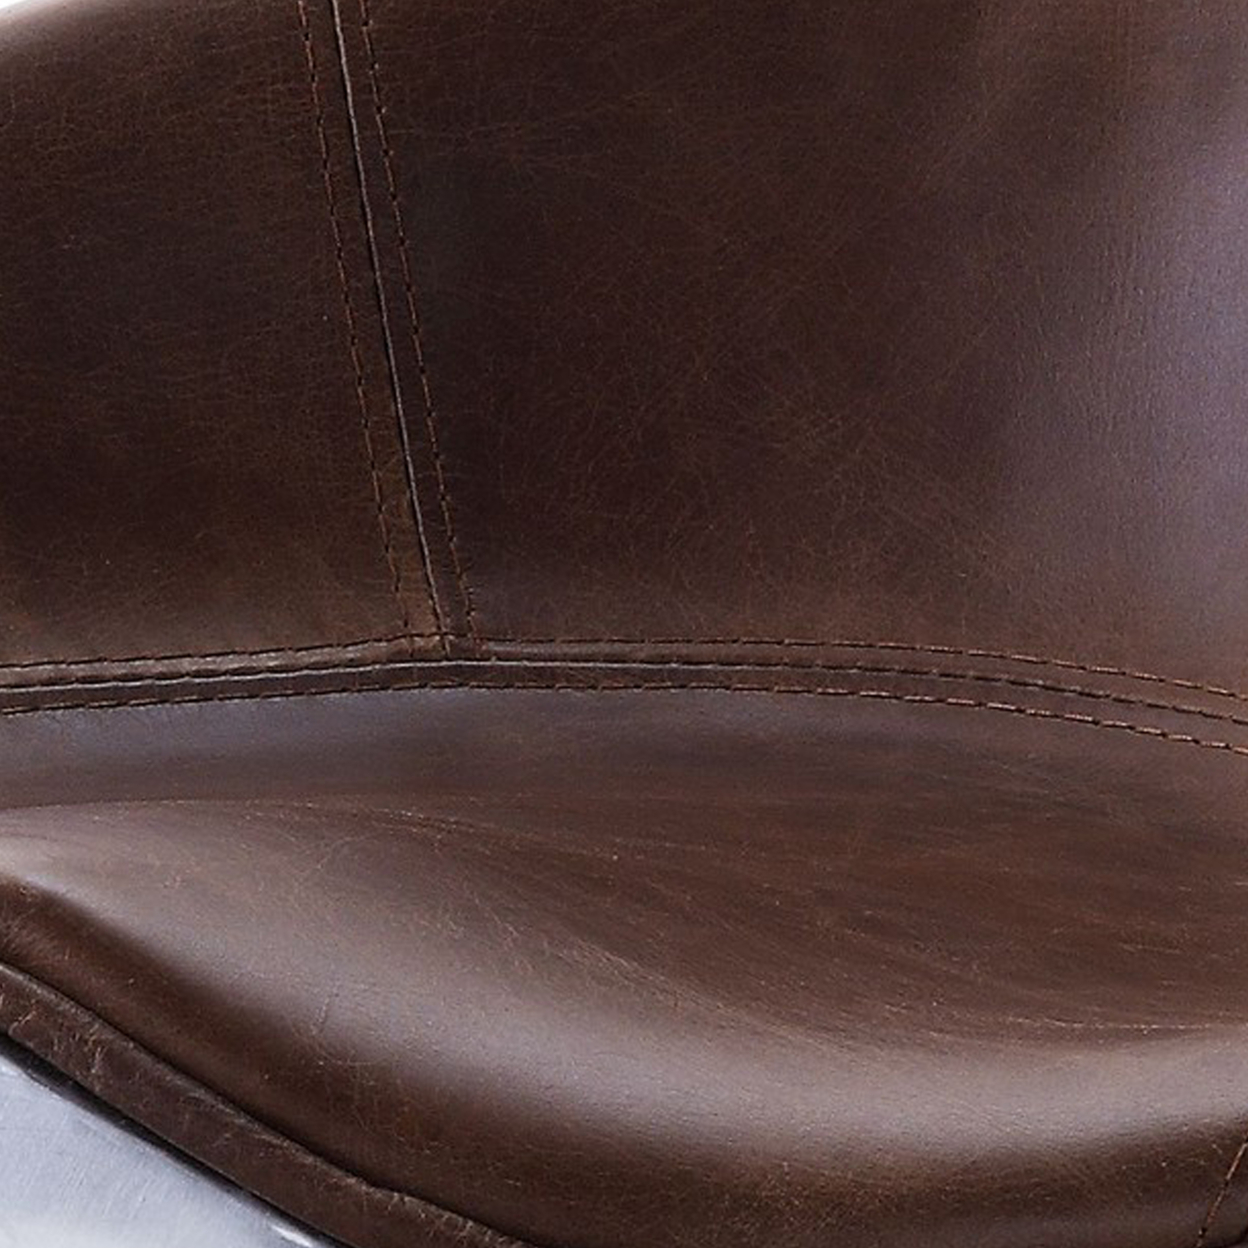 Spherical Metal Ottoman With Leatherette Saddle Seat, Gray And Brown- Saltoro Sherpi